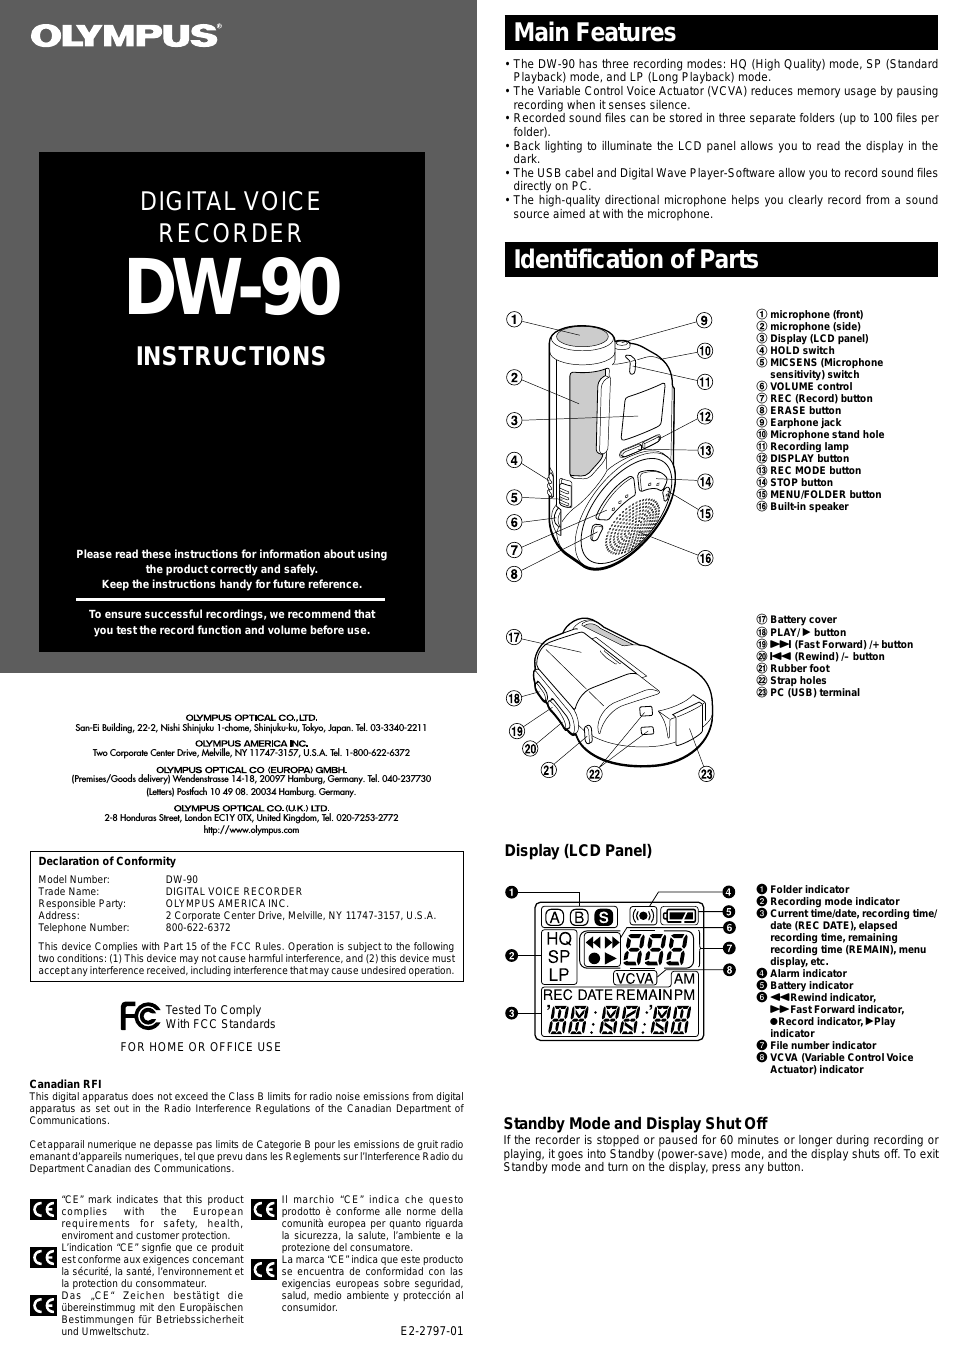 Digital Voice Recorder DW-90